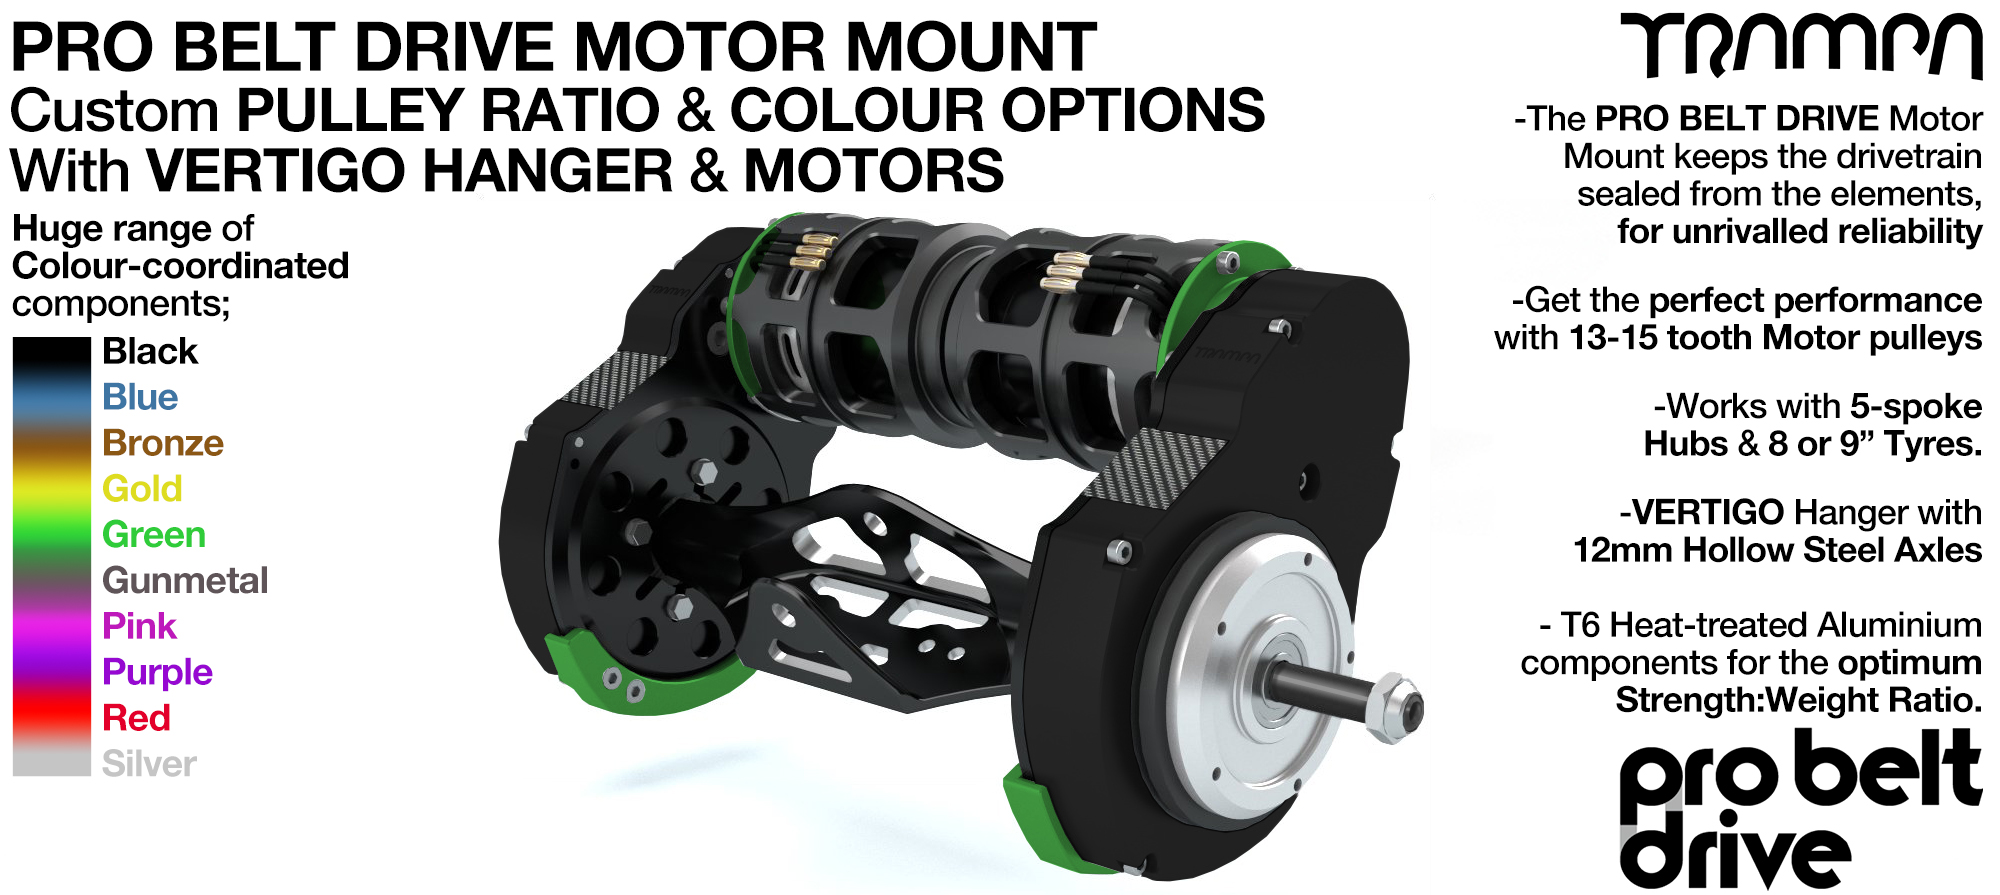 16mm PRO BELT DRIVE LOADED Motor Mounts MOTORS, PULLEYS & Motor PROTECTION FILTERS mounted on a CNC Hanger 